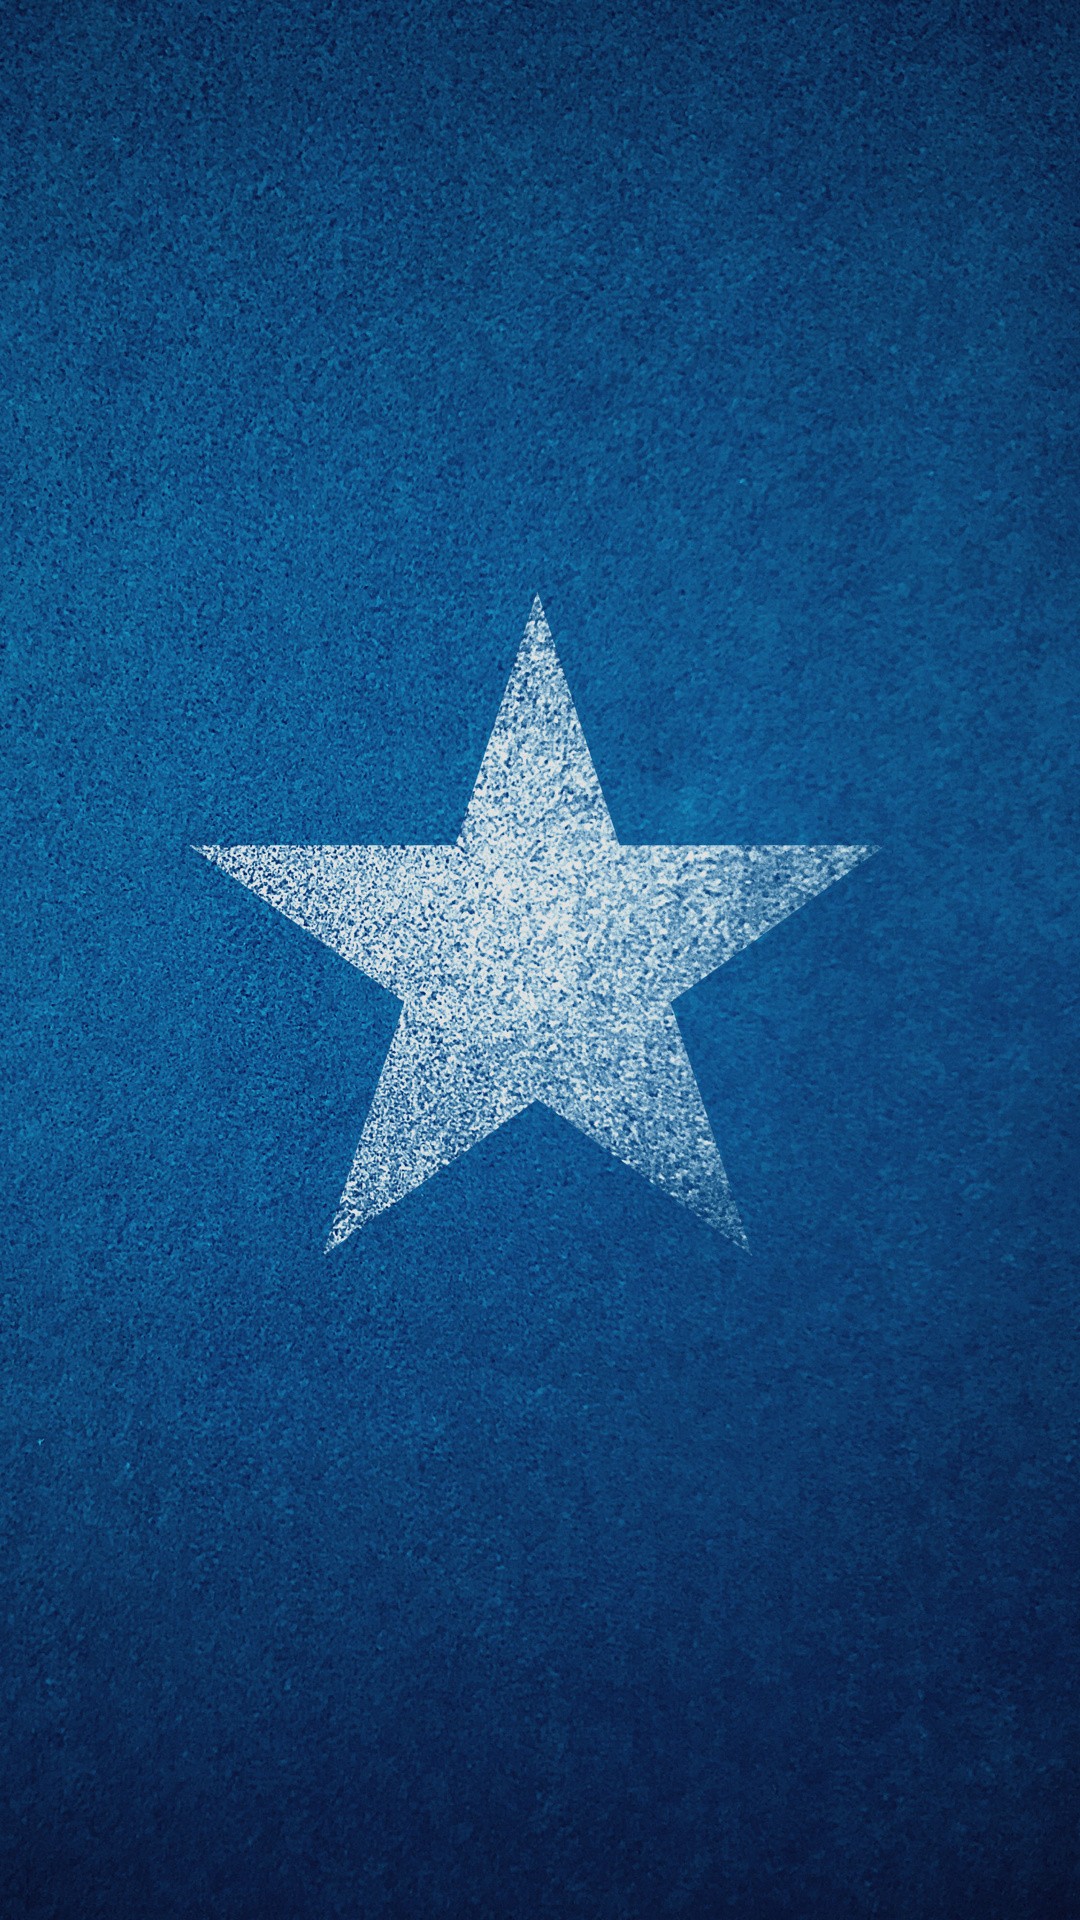 Single Star Wallpaper - [1080x1920]